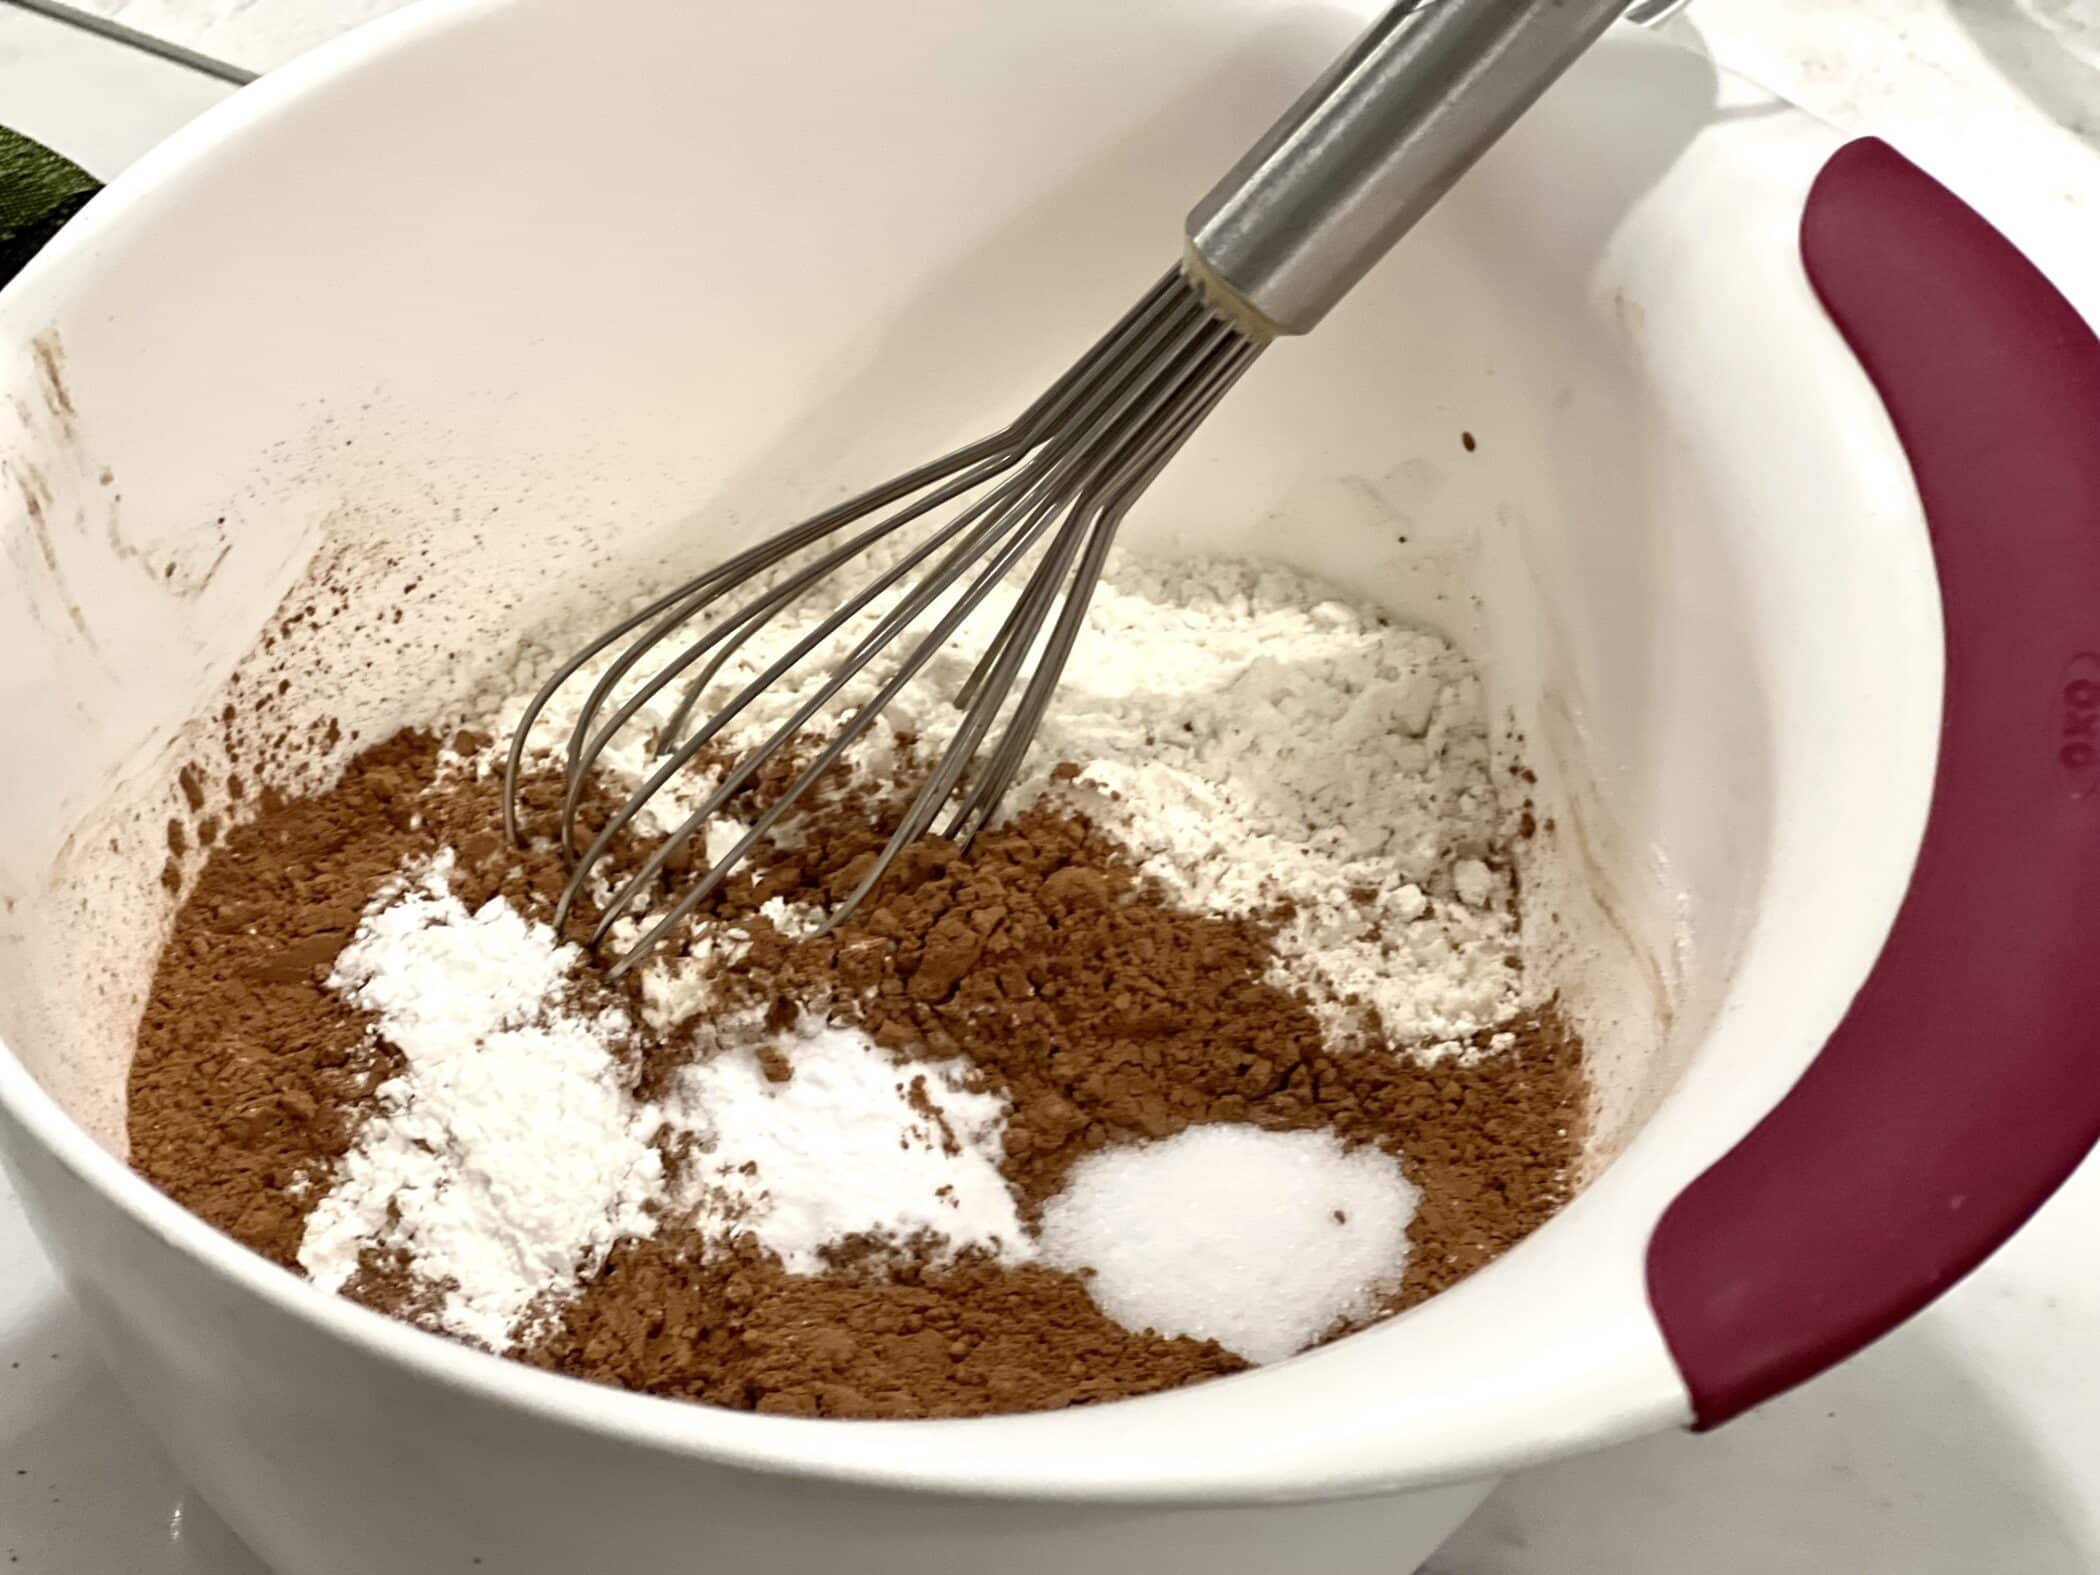 flour, cocoa powder, salt, baking powder and baking soda in a bowl